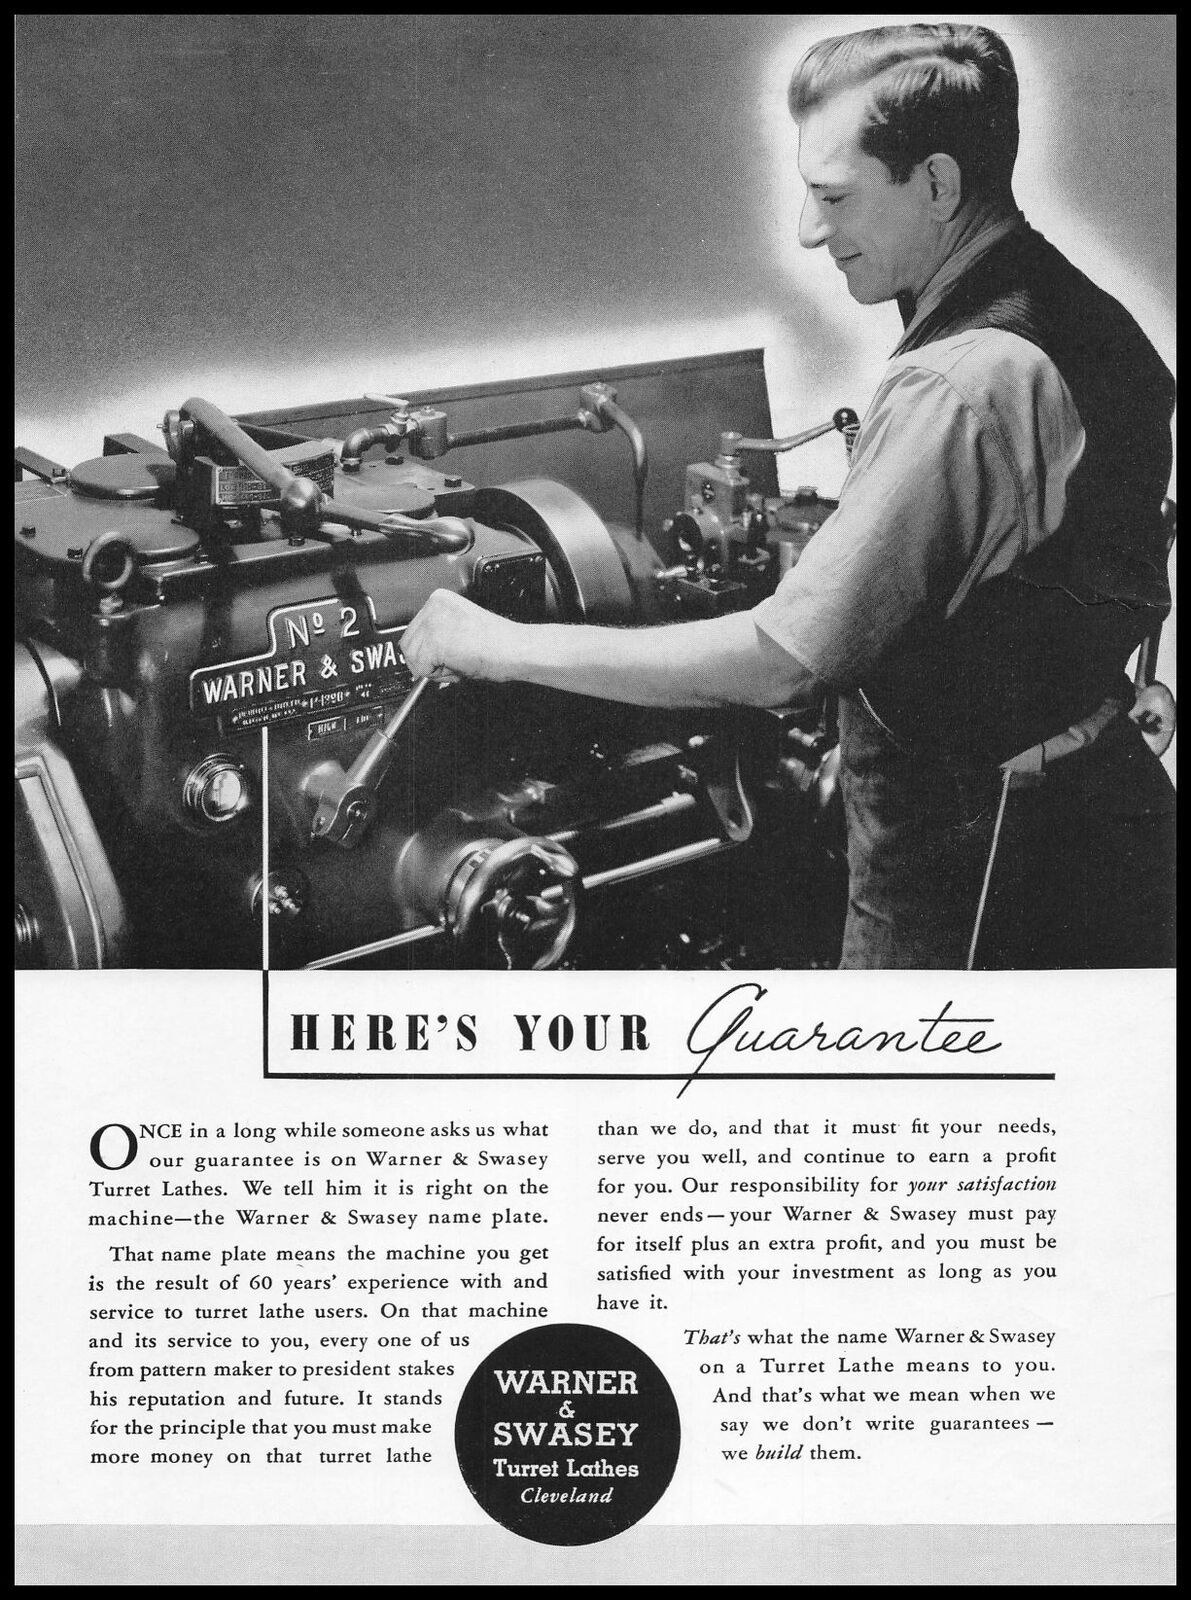 1940 Warner & Swasey Turret Lathes Cleveland Ohio Guarantee Vintage Print Ad